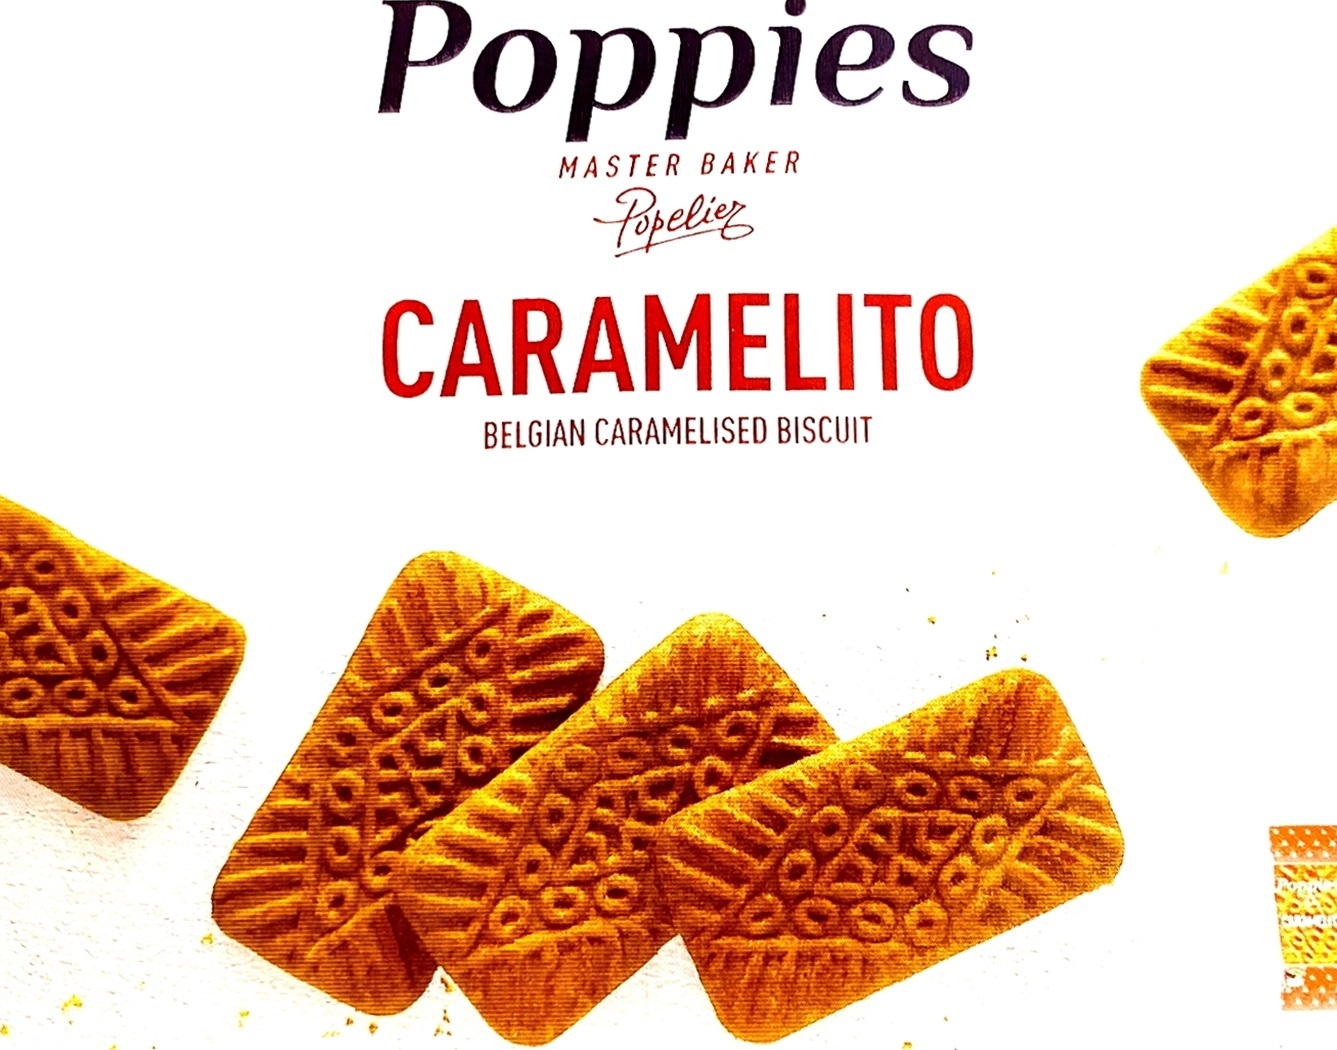 Poppies Caramelito Belgian Caramelised Biscuit.